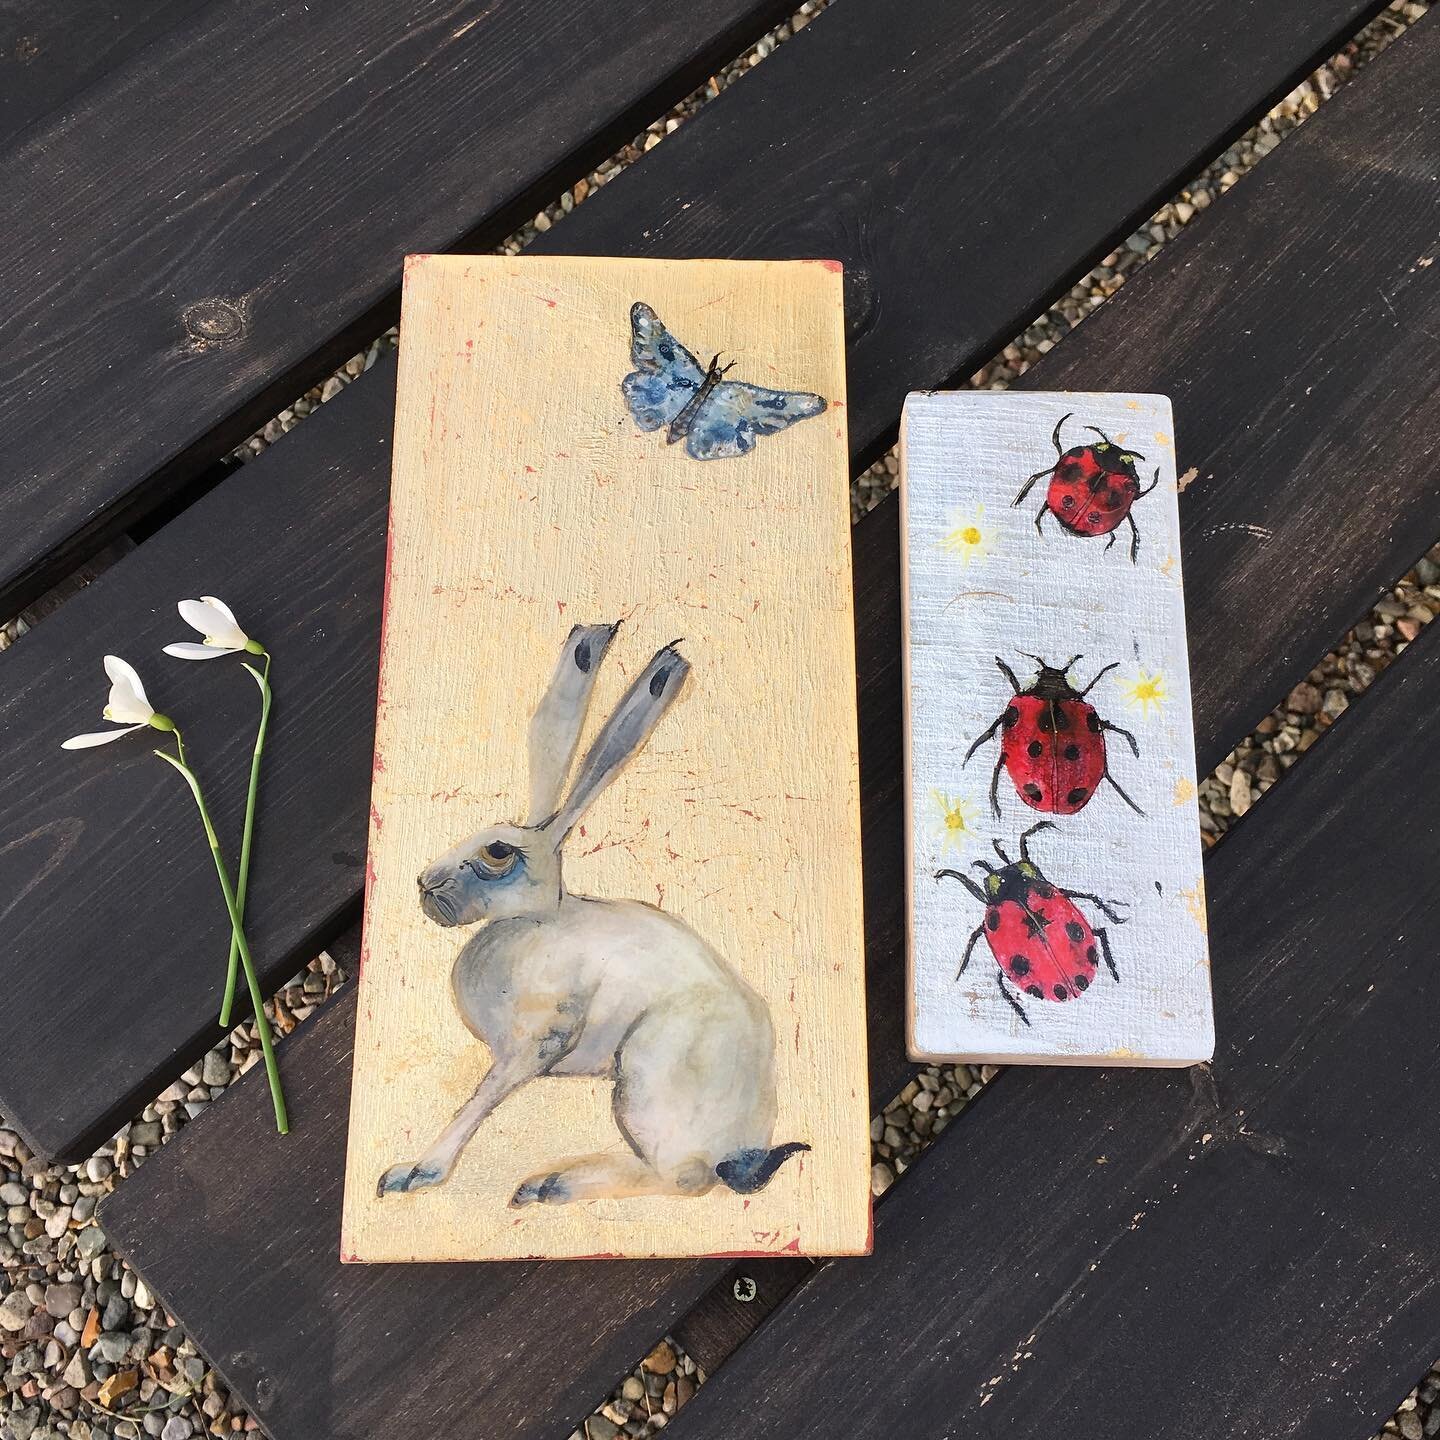 Sunday special 
Message me for details

 #harelovers #ladybirdlovers #paintingsofinstagram #artforsalebyartist #loveart #picturetime #butterfly #insectlovers #insectillustration